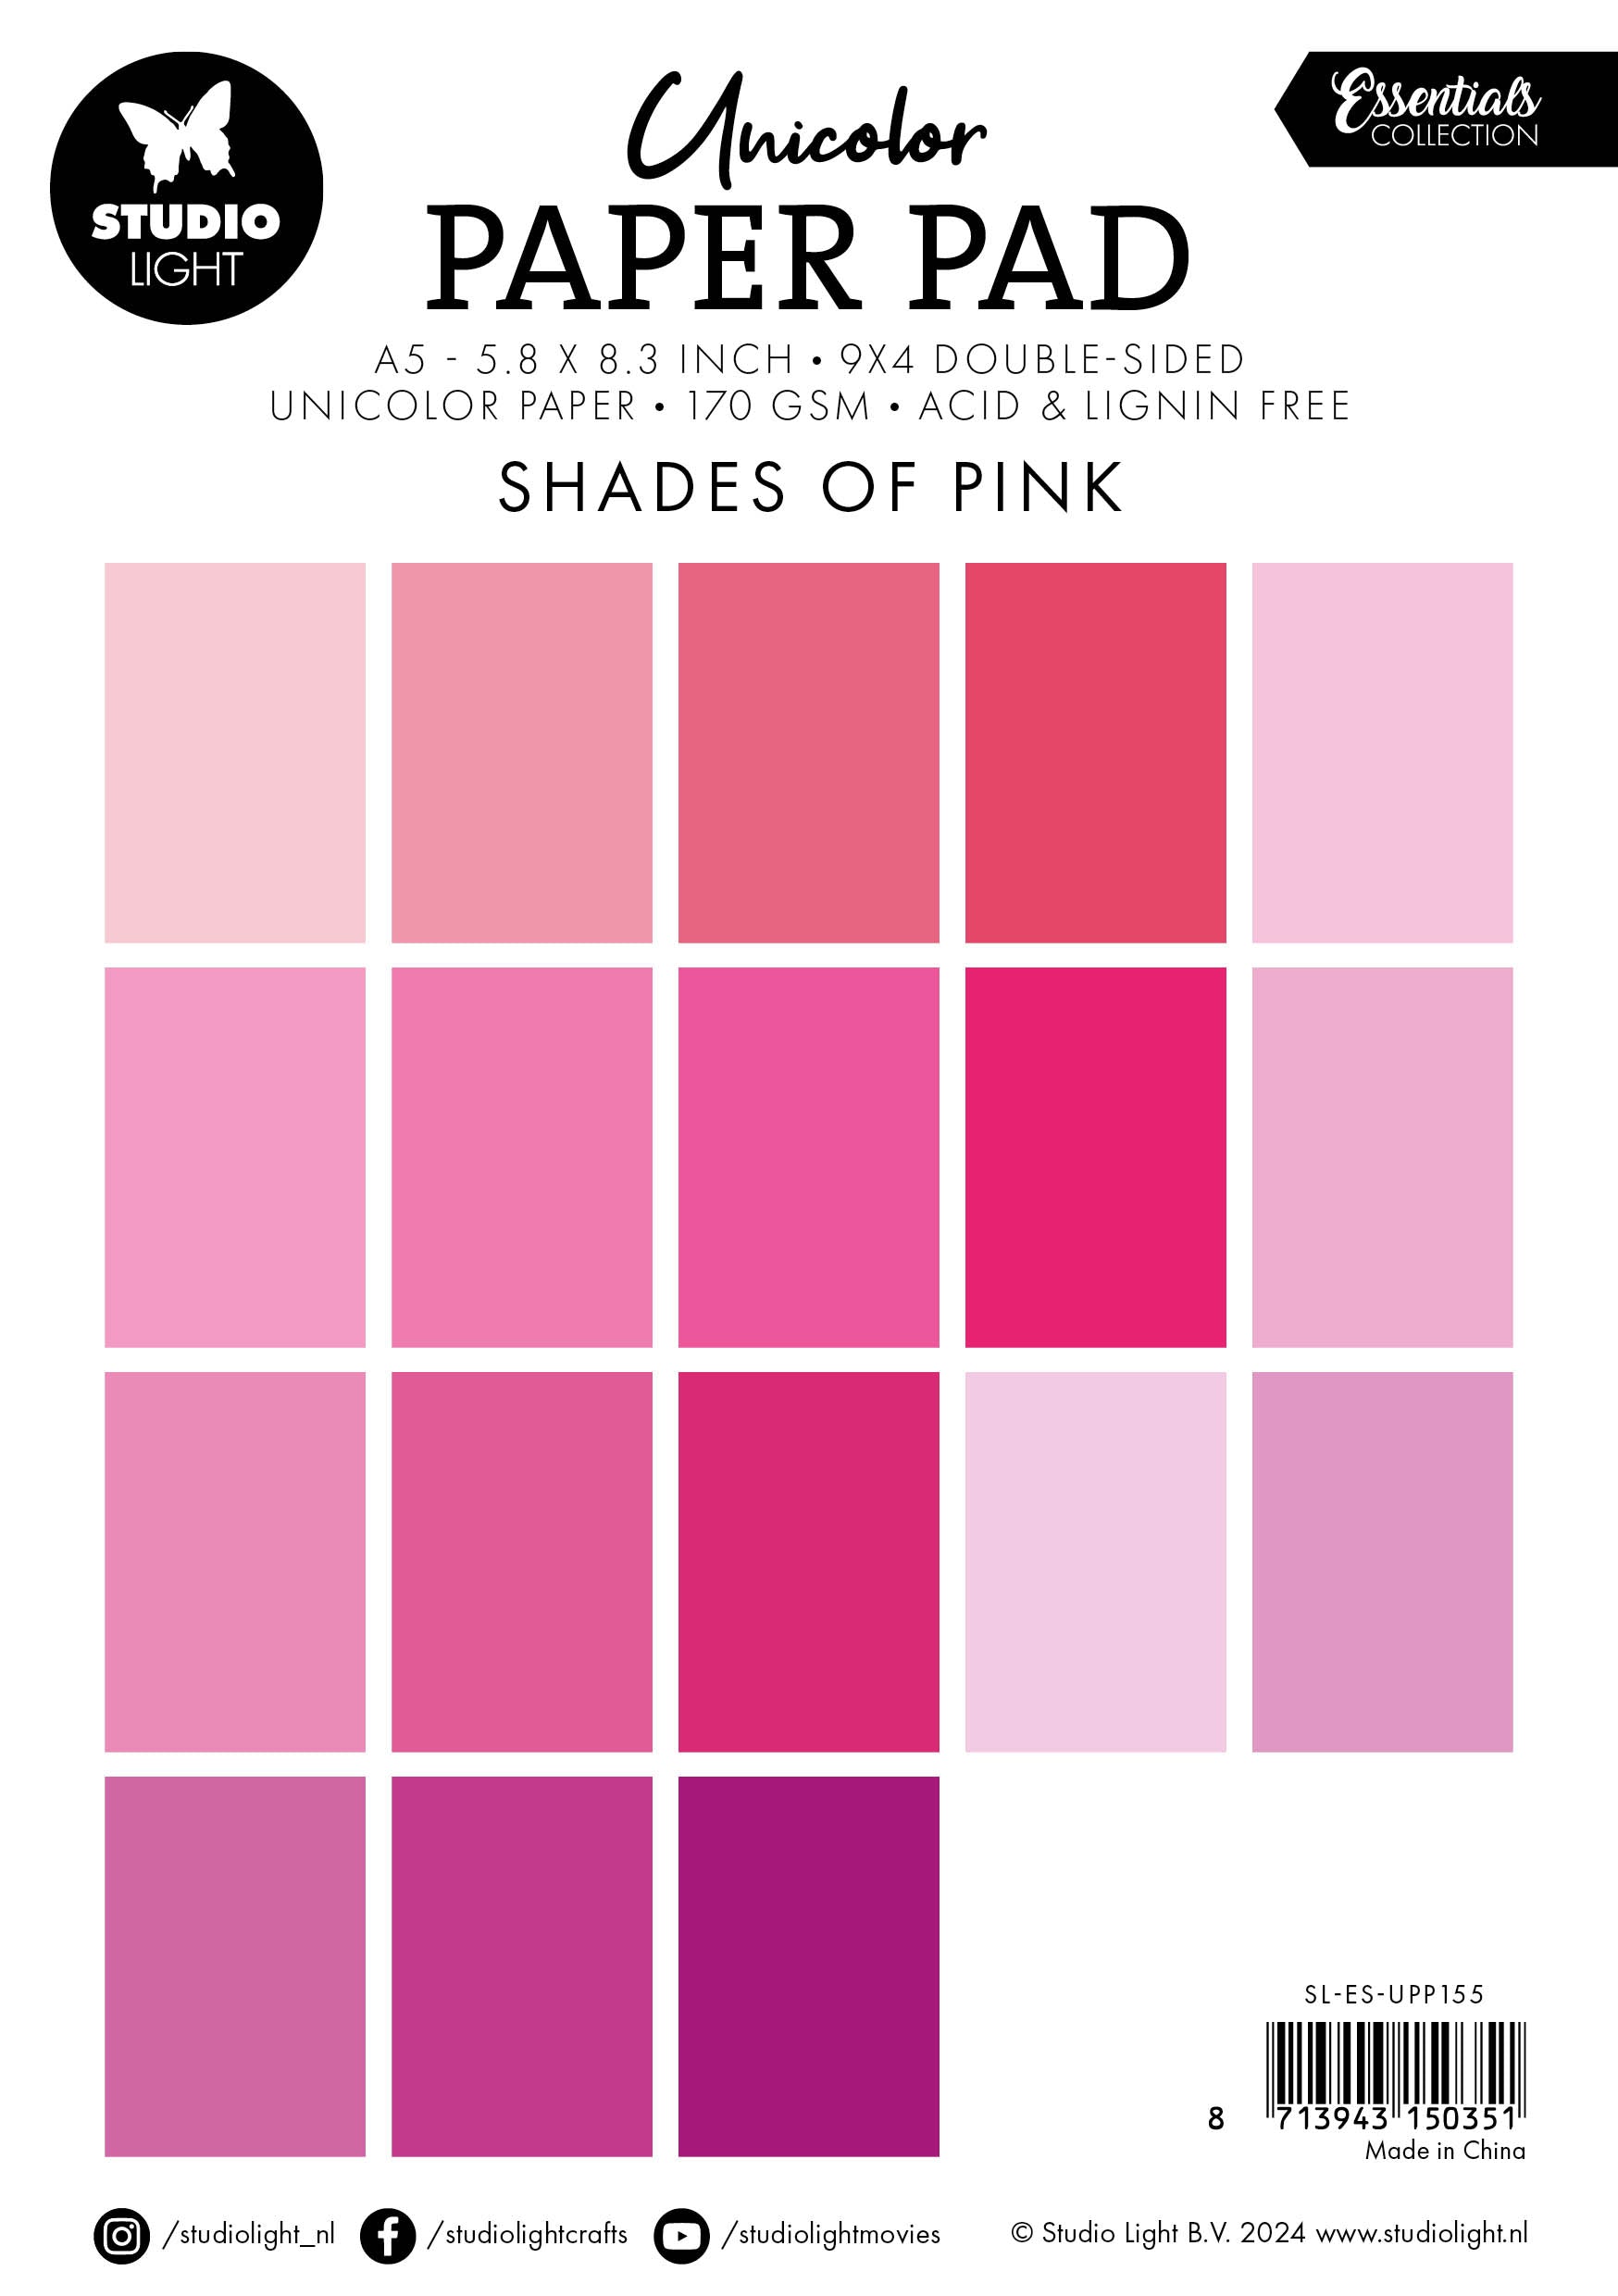 SL Unicolor Paper Pad Shades Of Pink Essentials 36 SH